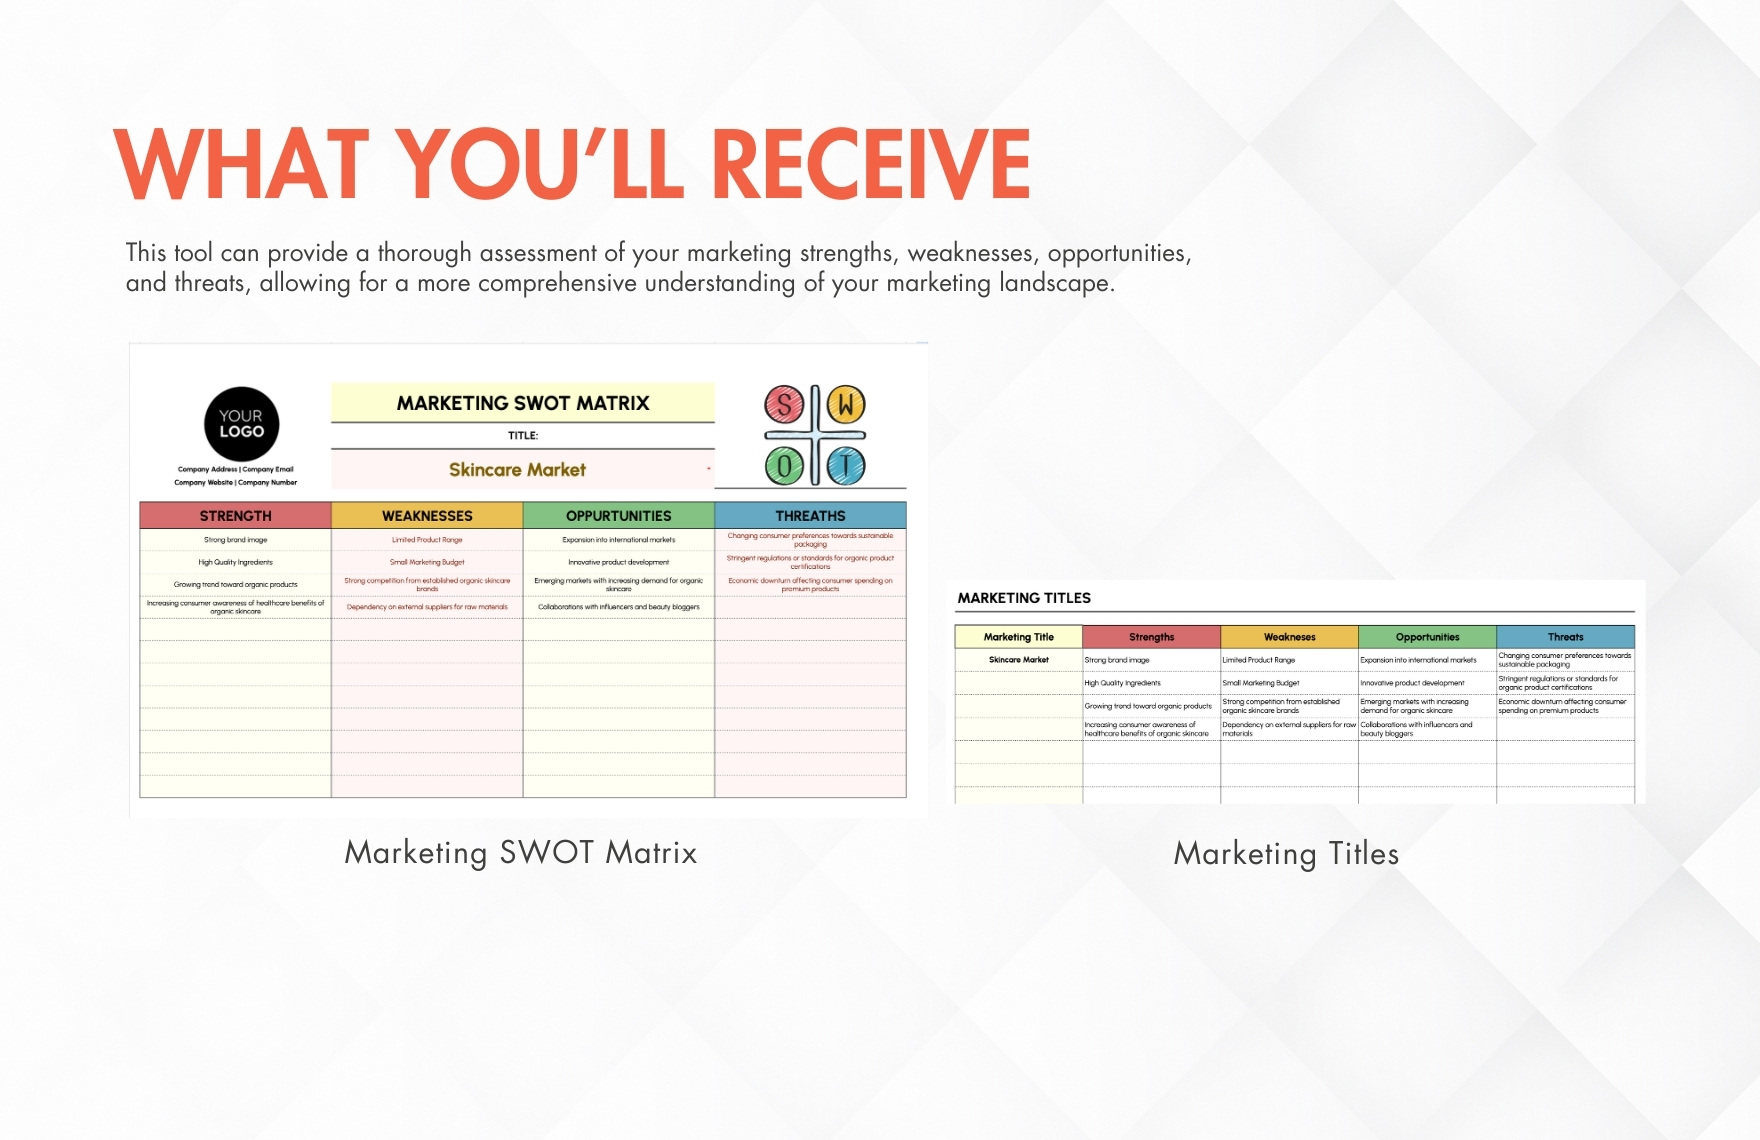 Marketing SWOT Matrix Template